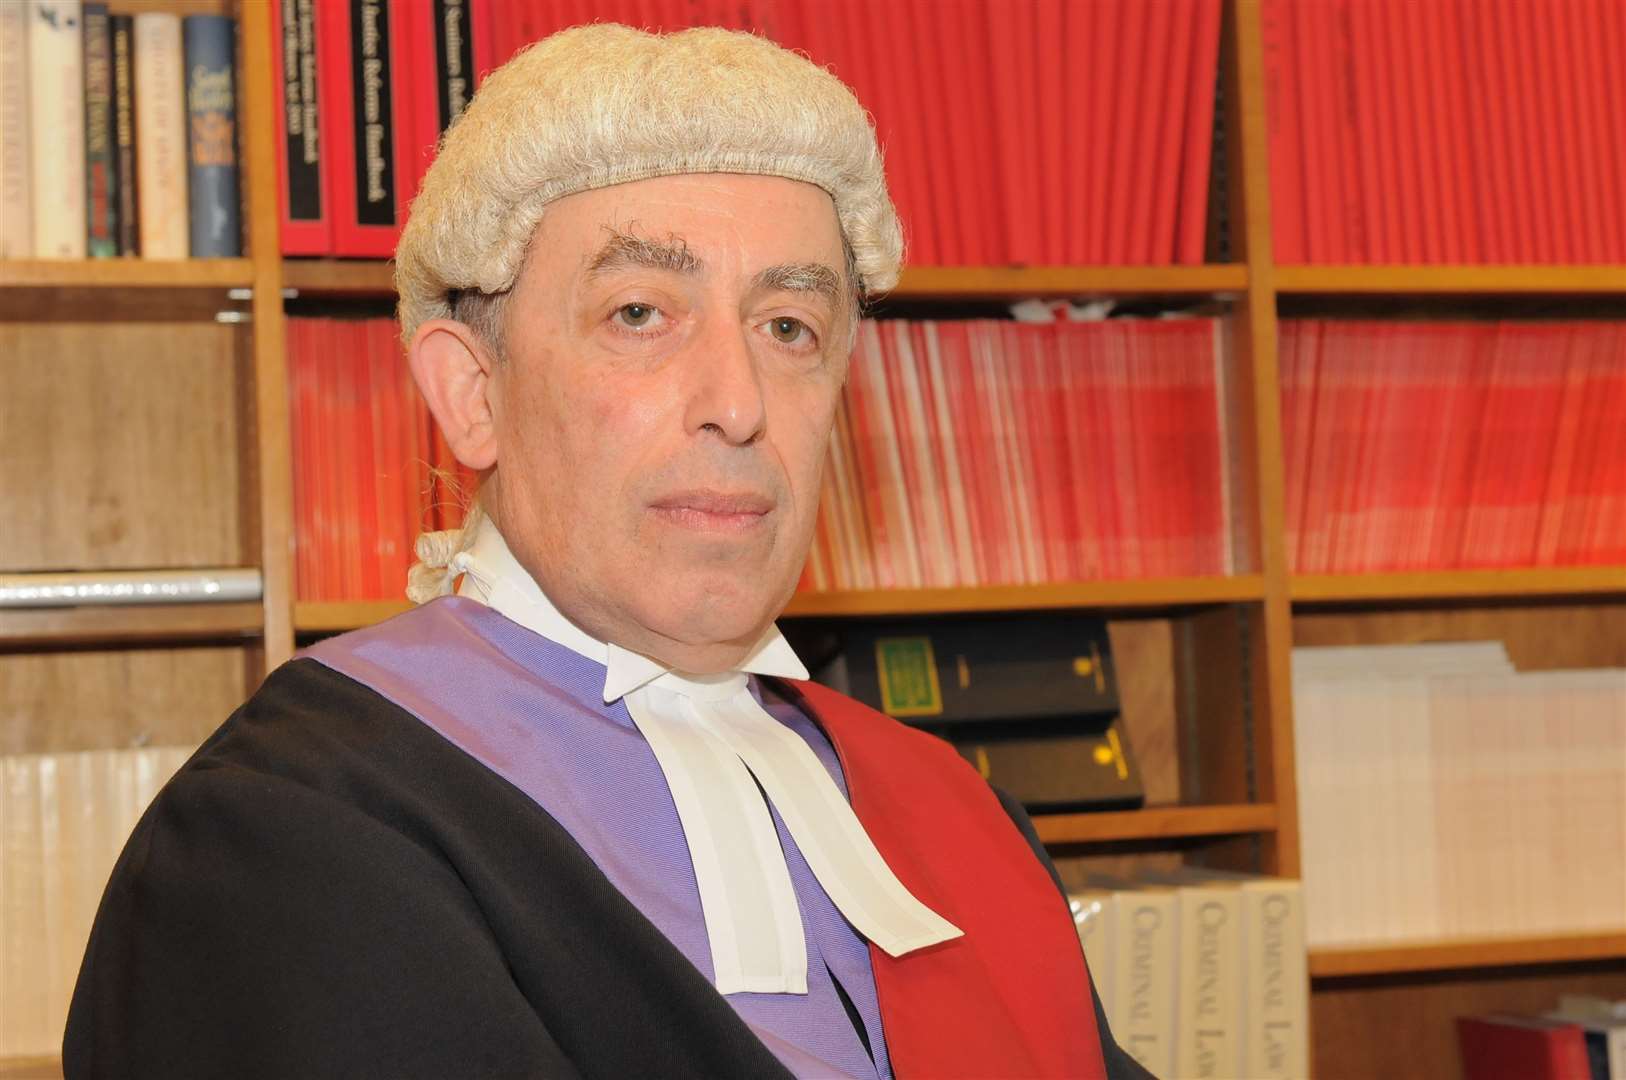 Judge Philip Statman. Picture: Steve Crispe